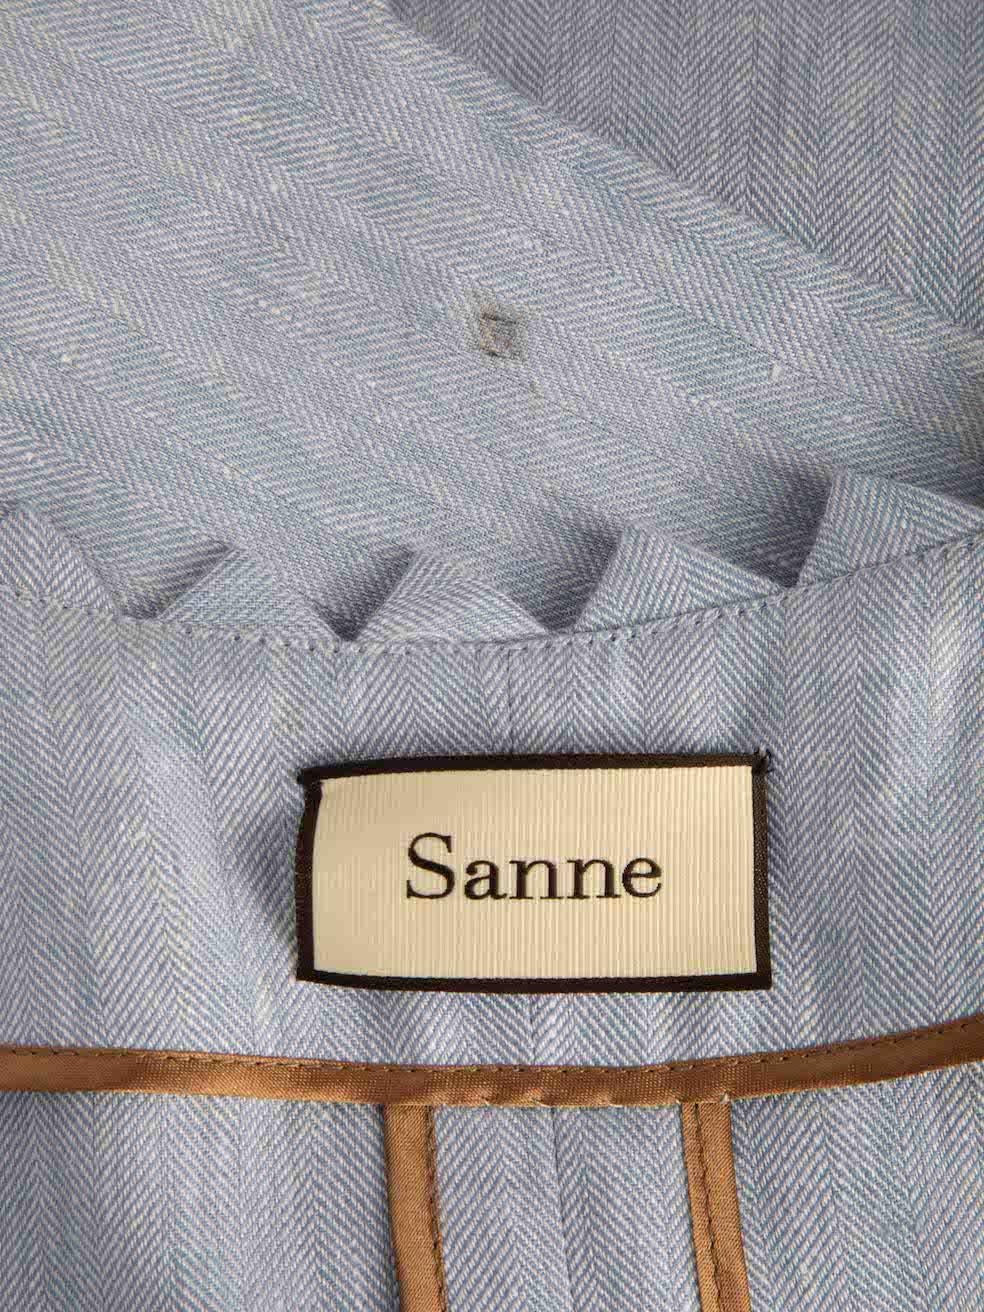 Sanne Women's Blue Herringbone Geometric Accent Dress 1